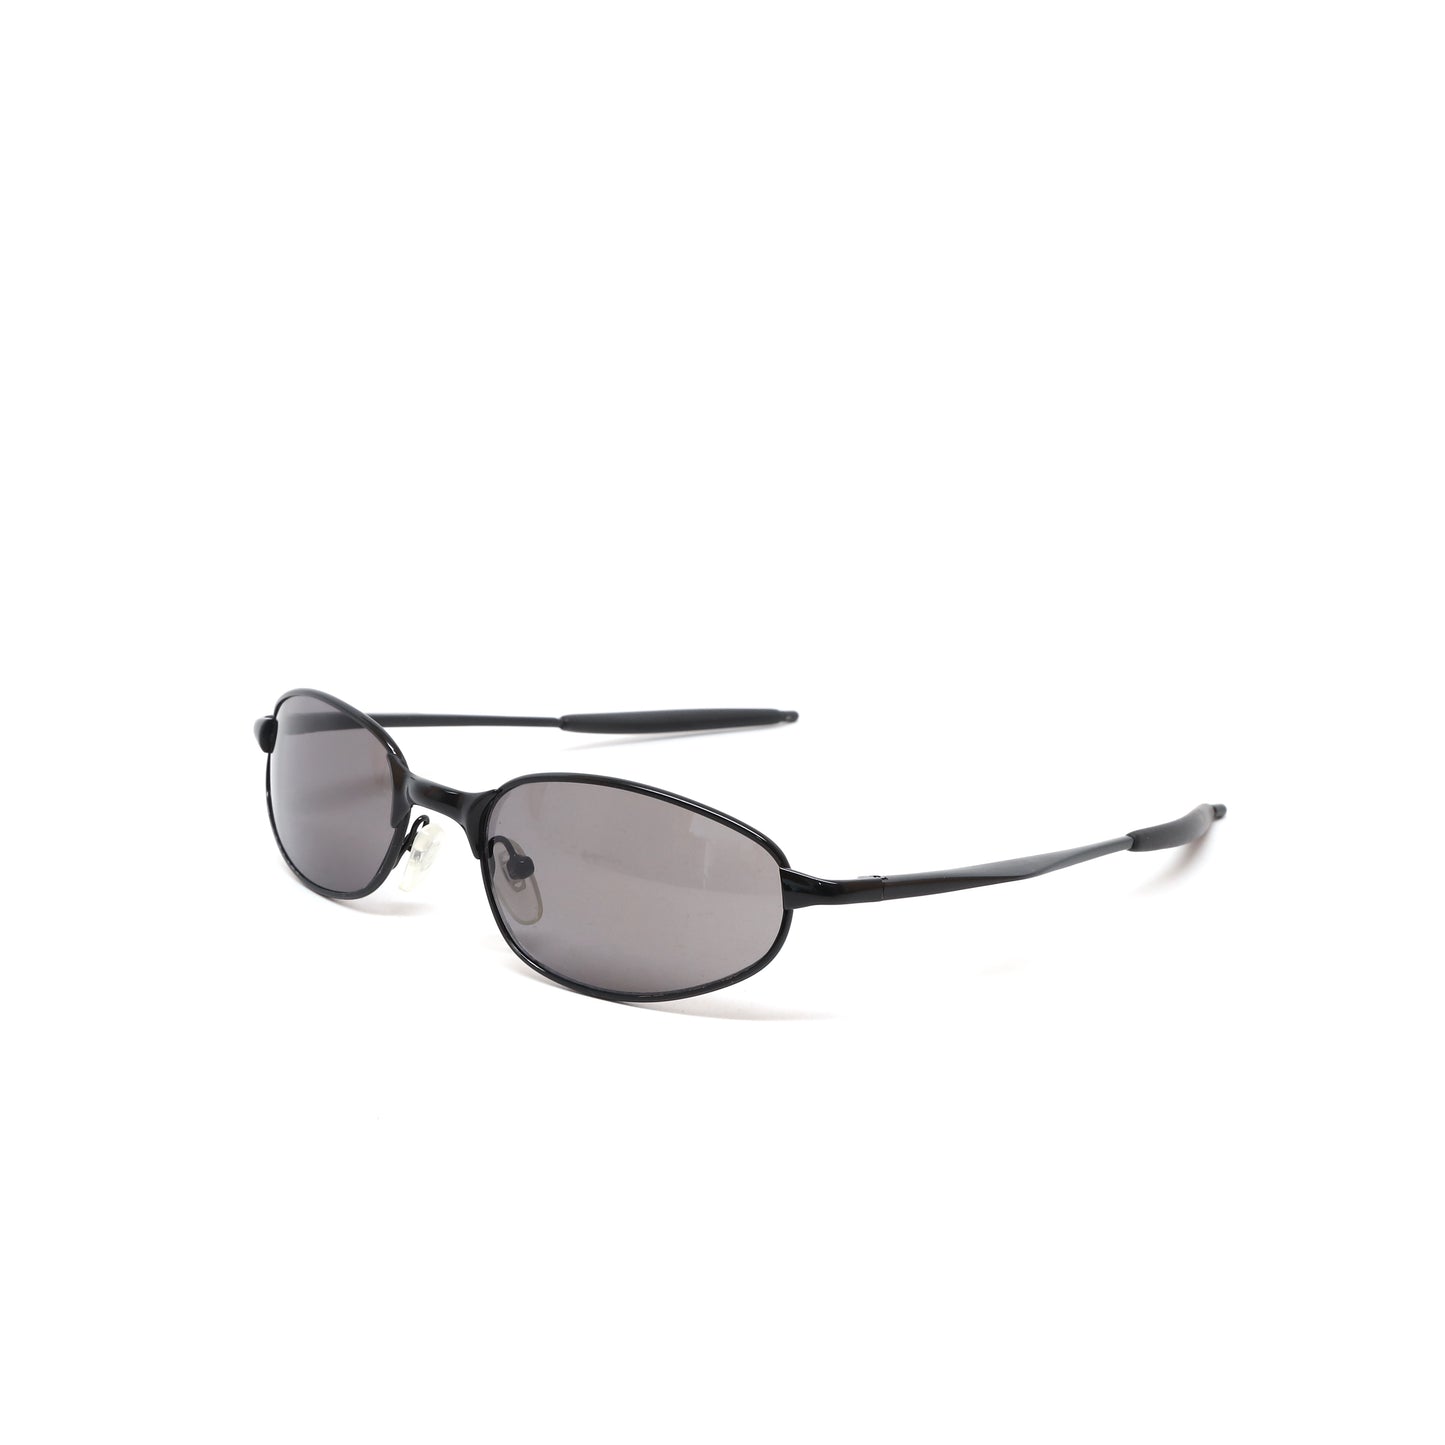 Vintage Small Size 90s Matrix Style Sunglasses - Black